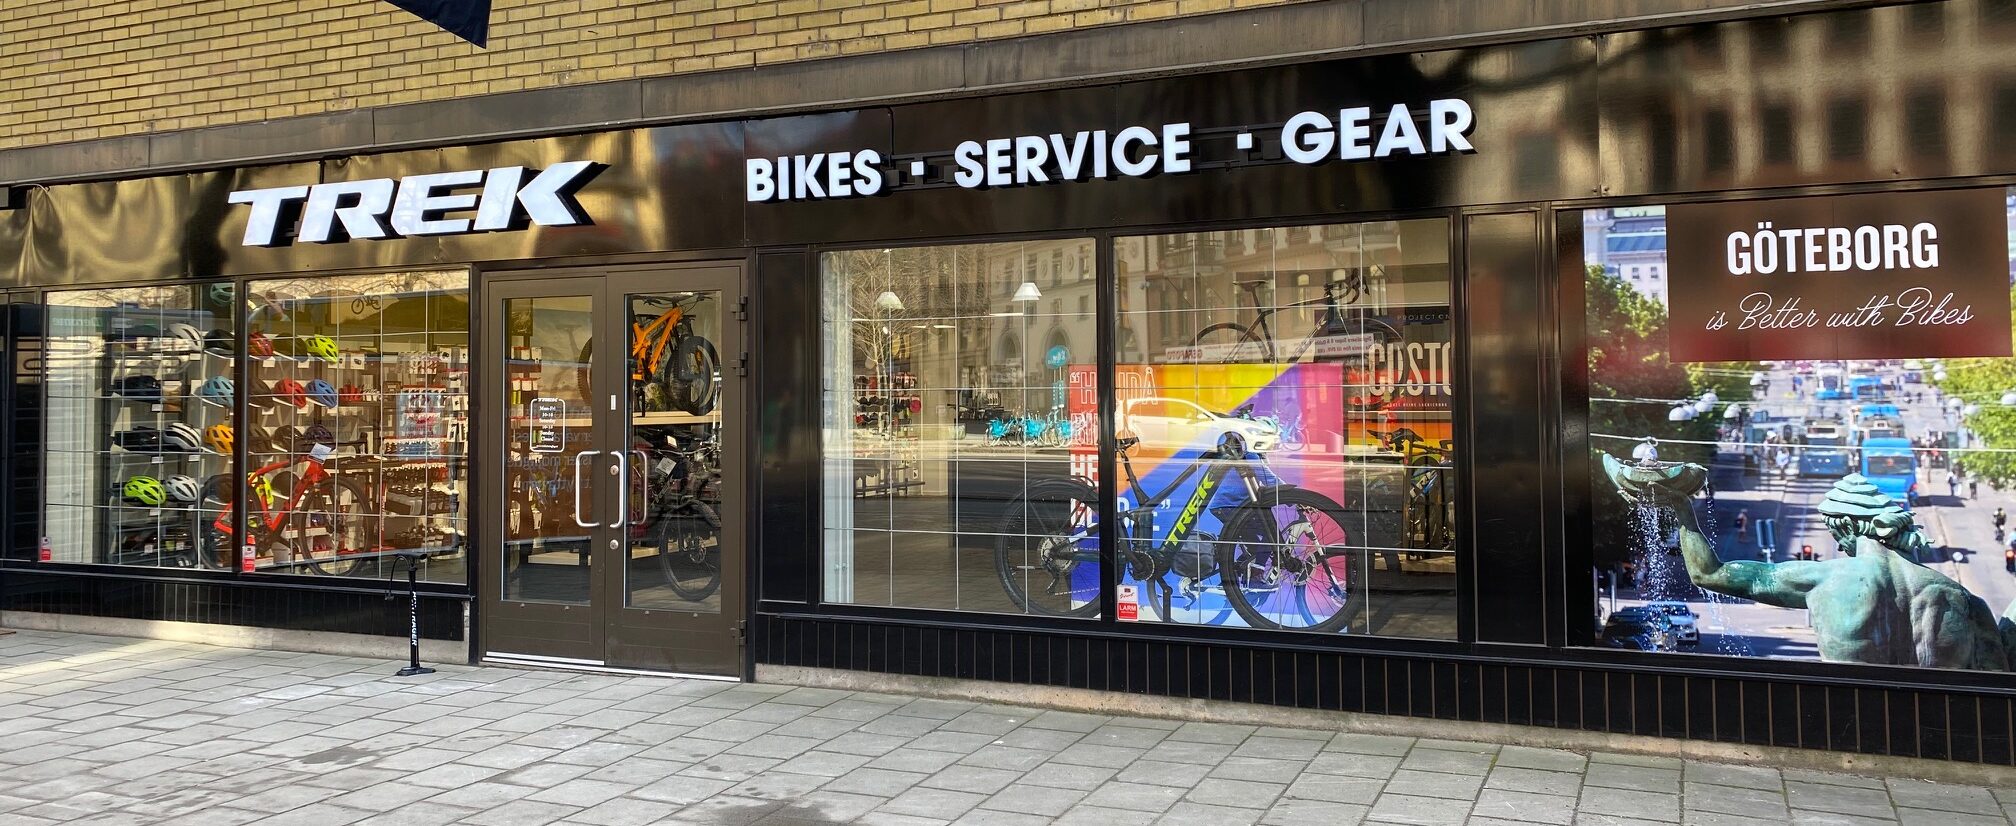 trek bicycle store & service gothenburg